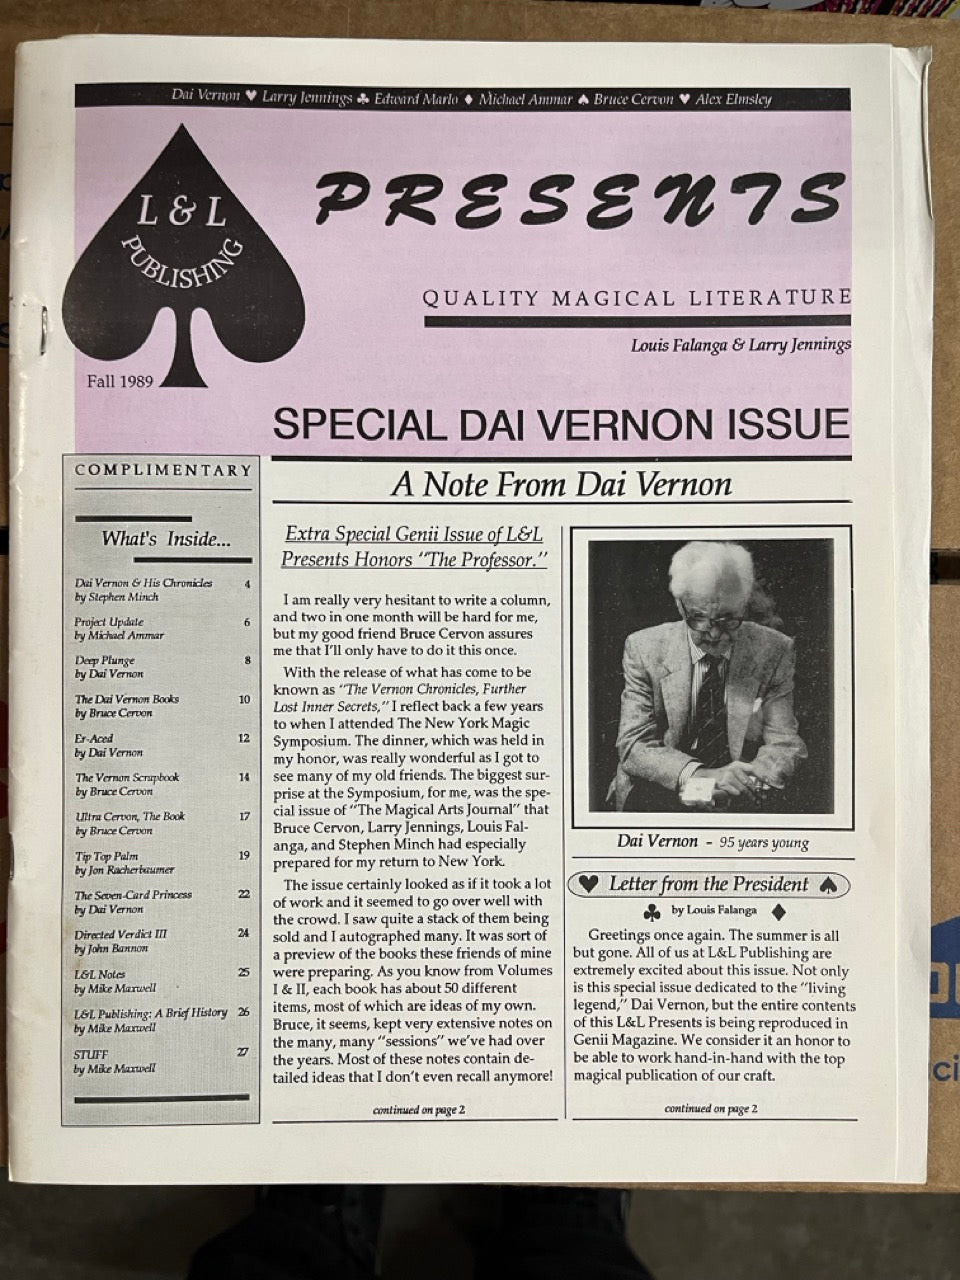 L&L Presents Quality Magical Literature , Special Dai Vernon Issue